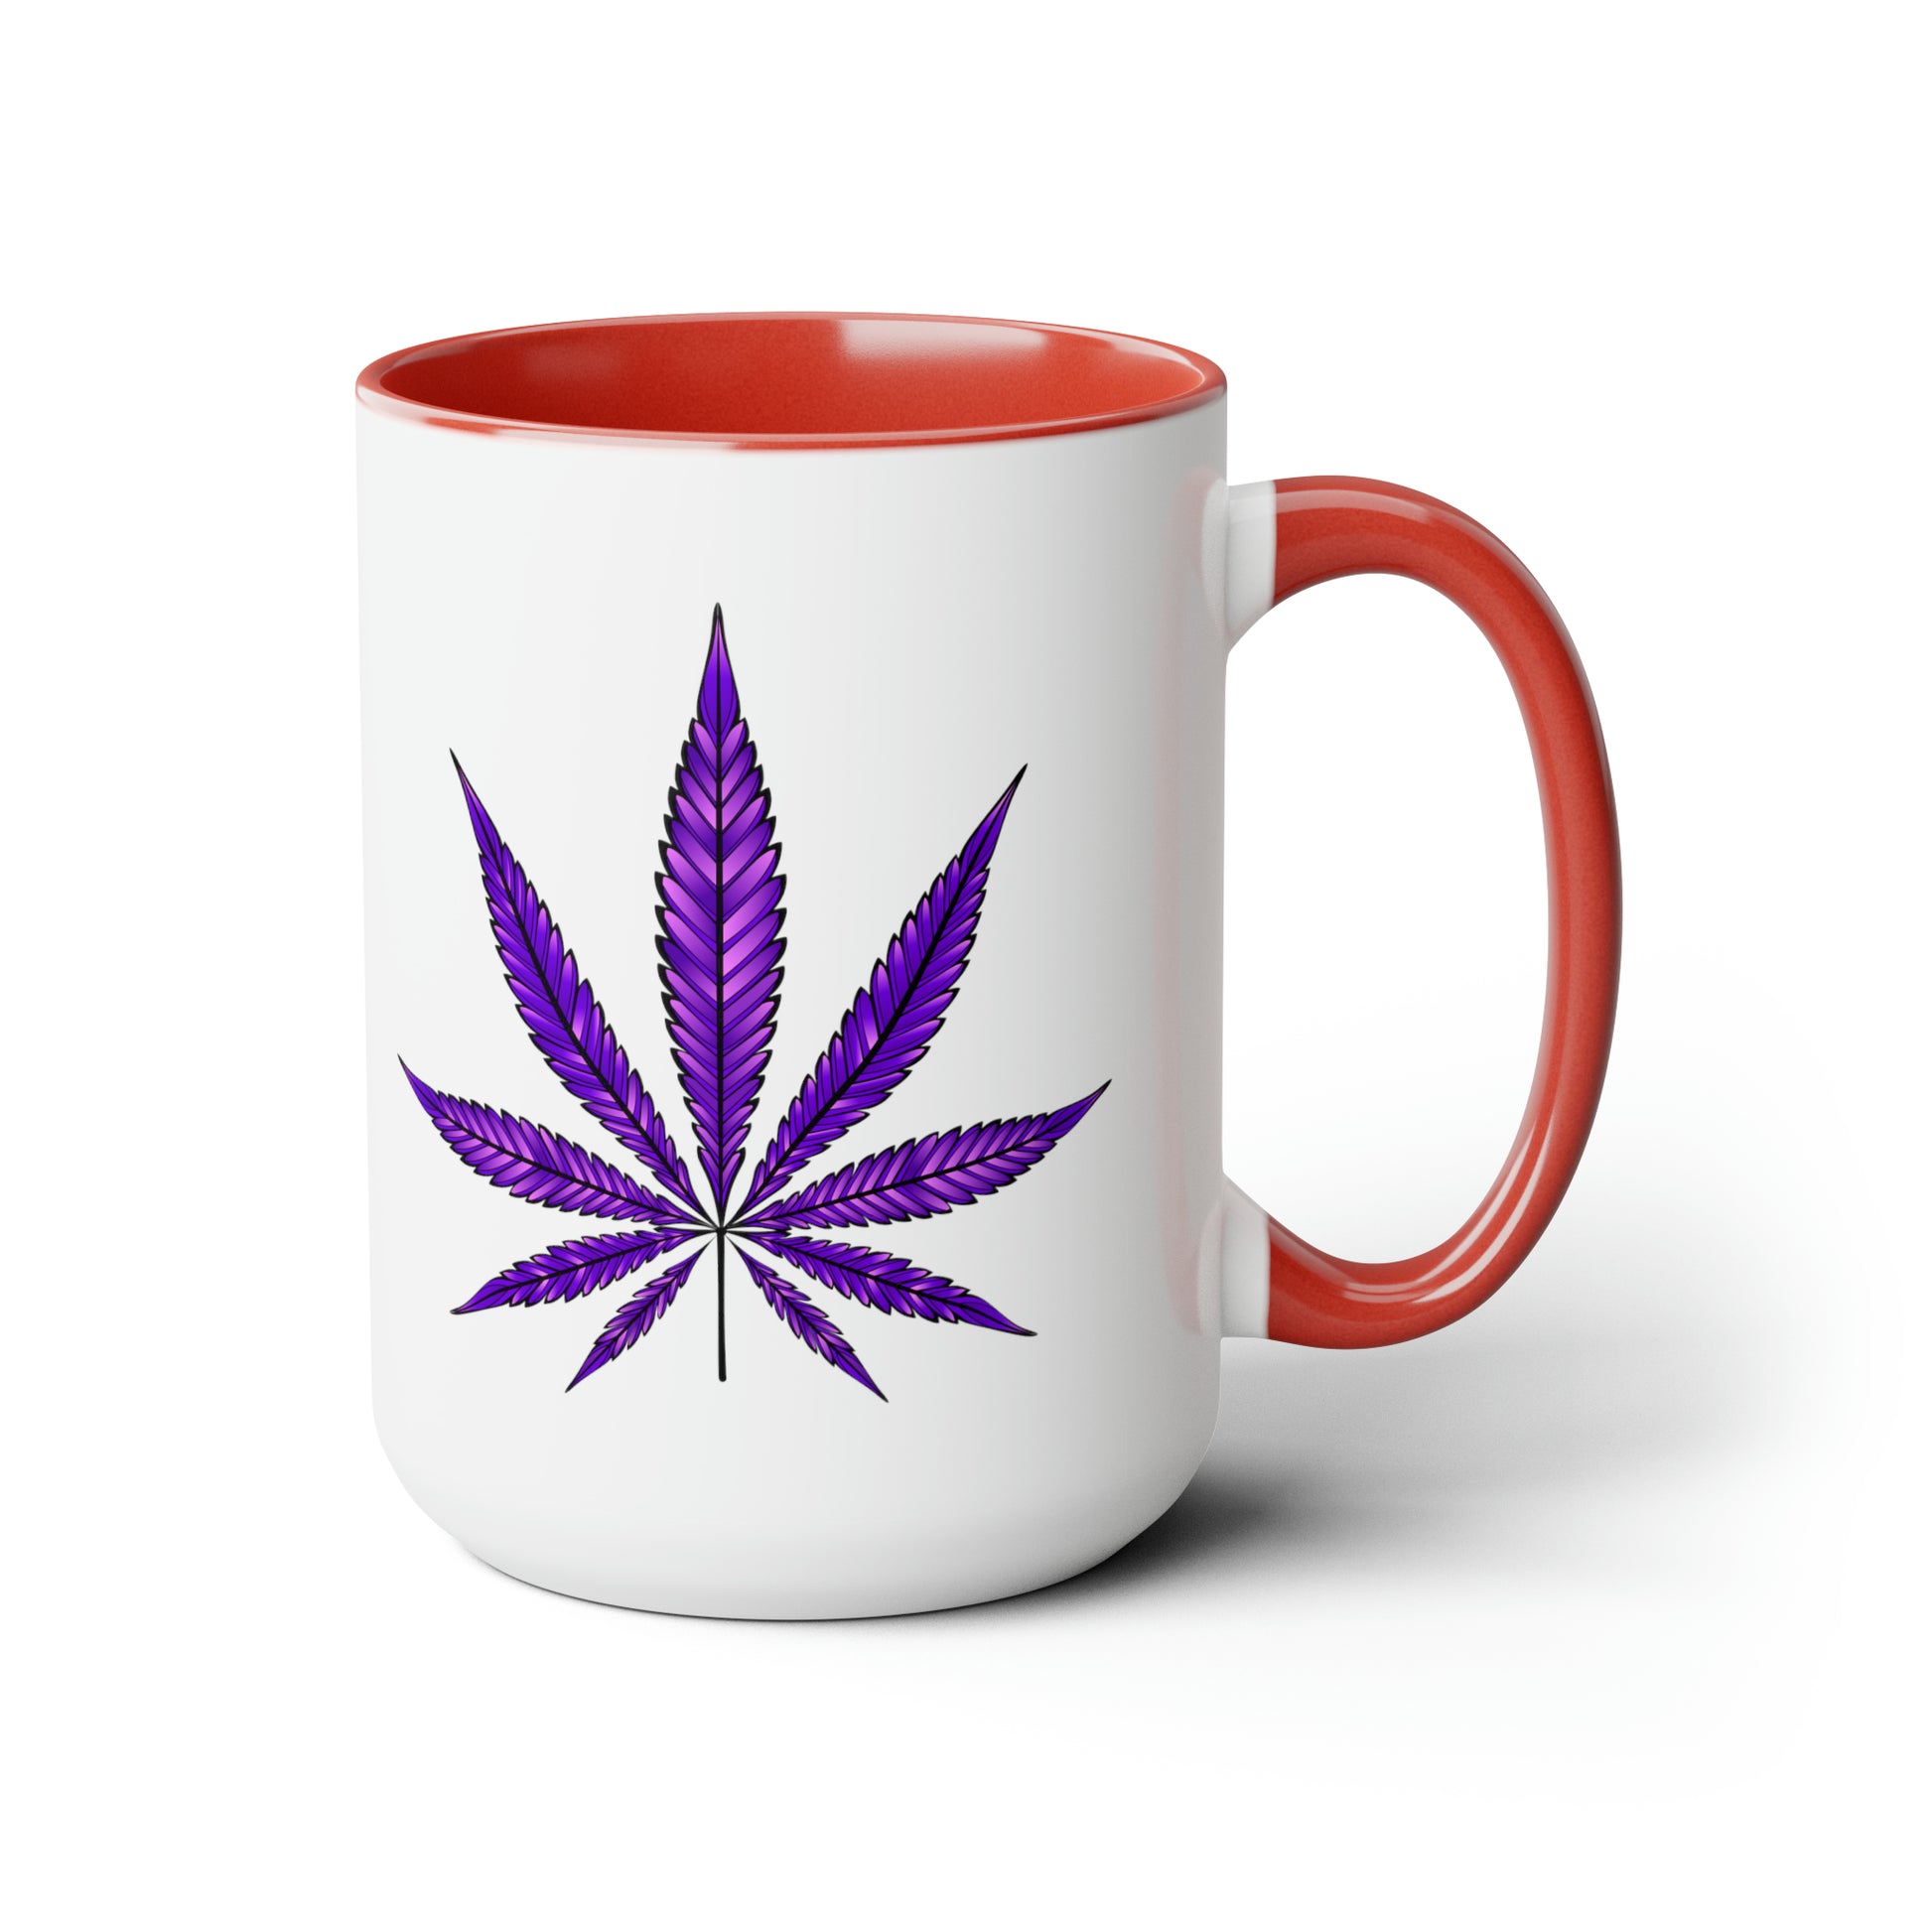 Sentence with replaced product name: Purple Haze Marijuana Coffee Mug with a Purple Haze Marijuana leaf design and a red interior, isolated on a white background.